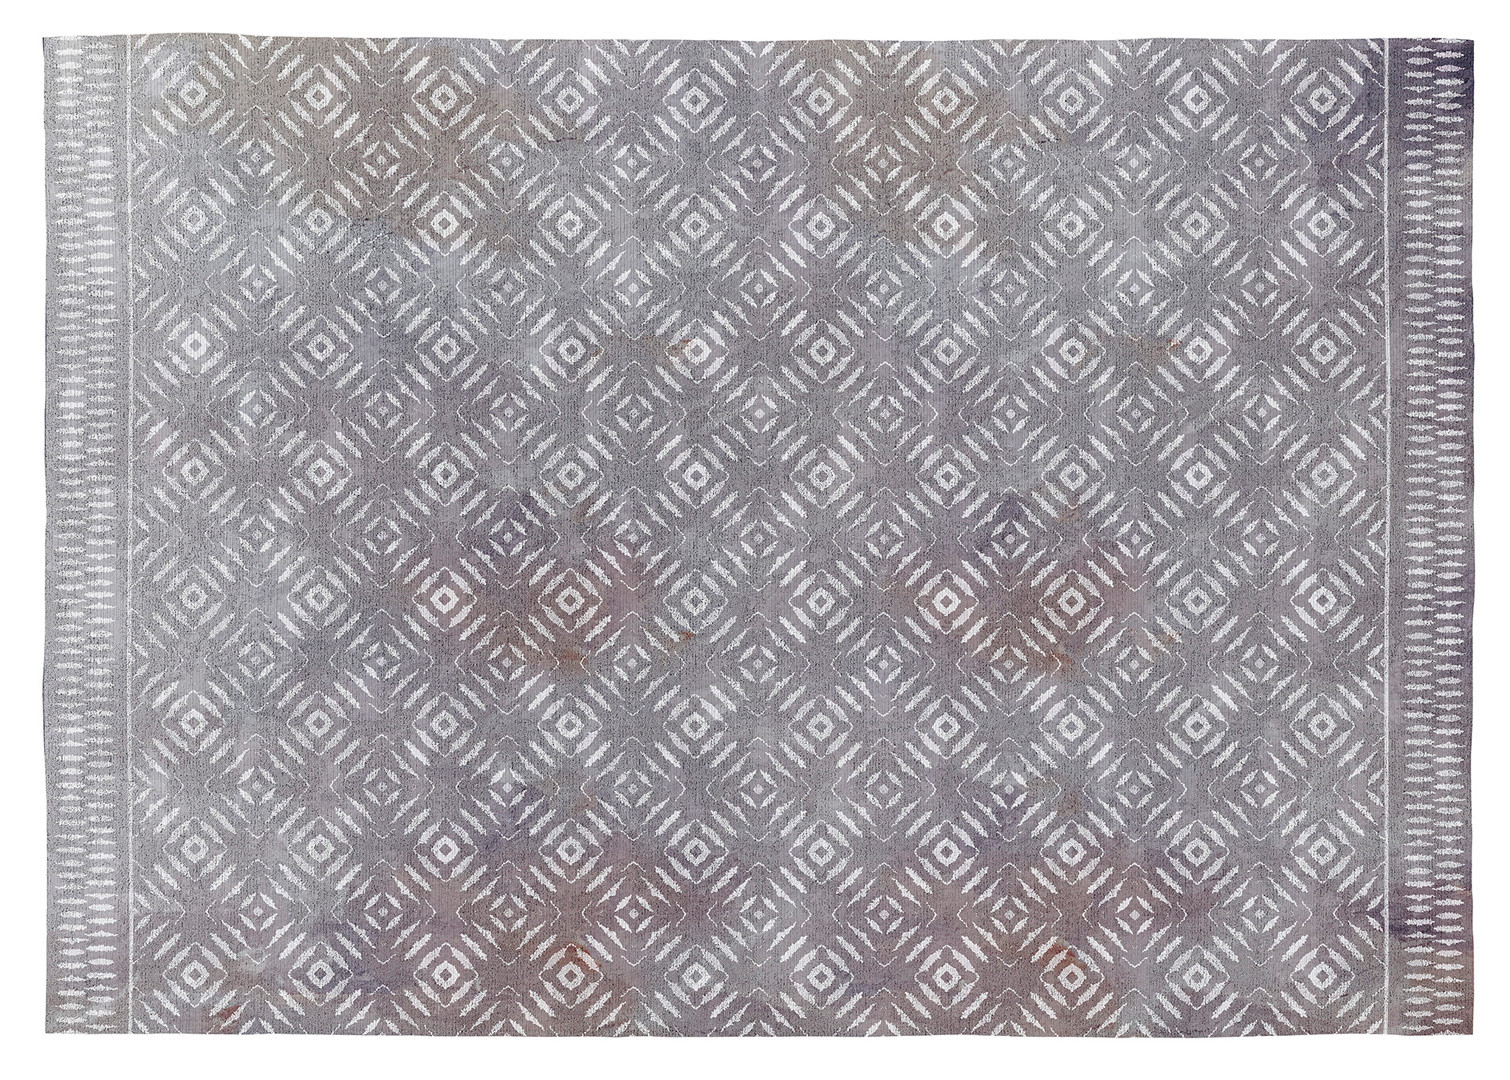 Tapis ethnique gris rectangle en coton Selena